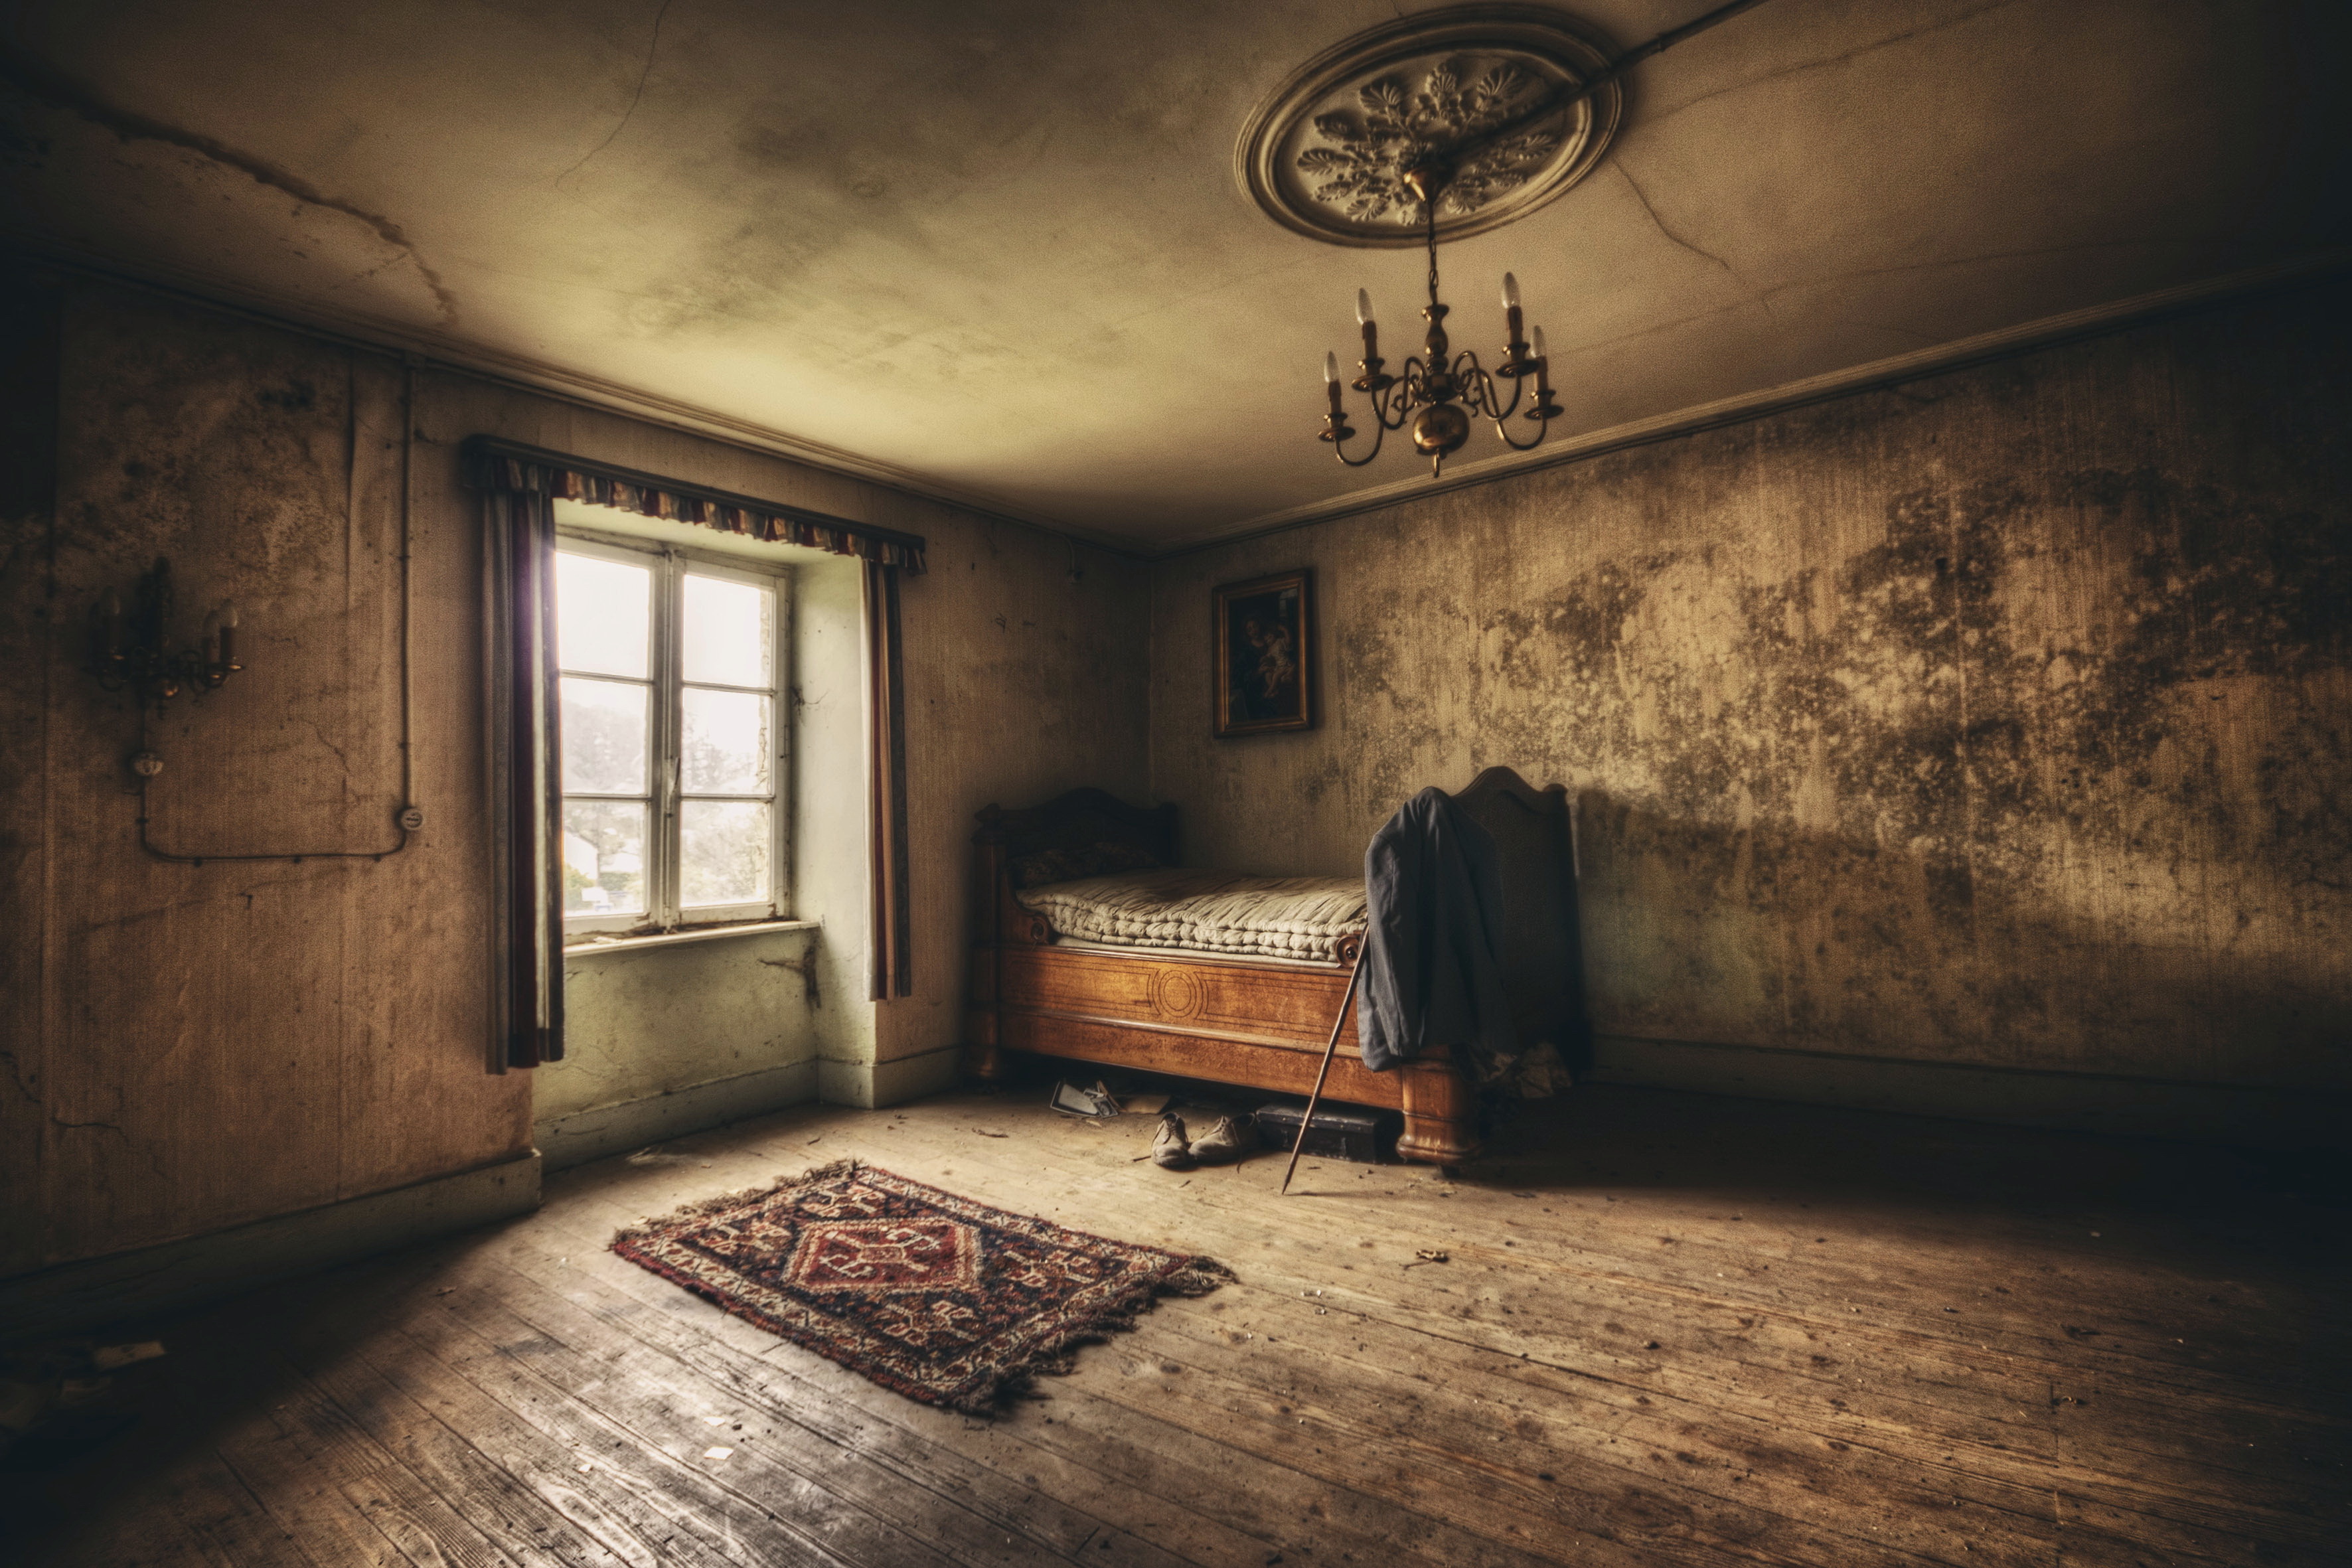 Сонник другая квартира. Старая комната. Старинная комната. Старинный интерьер комнаты. Пустая комната.